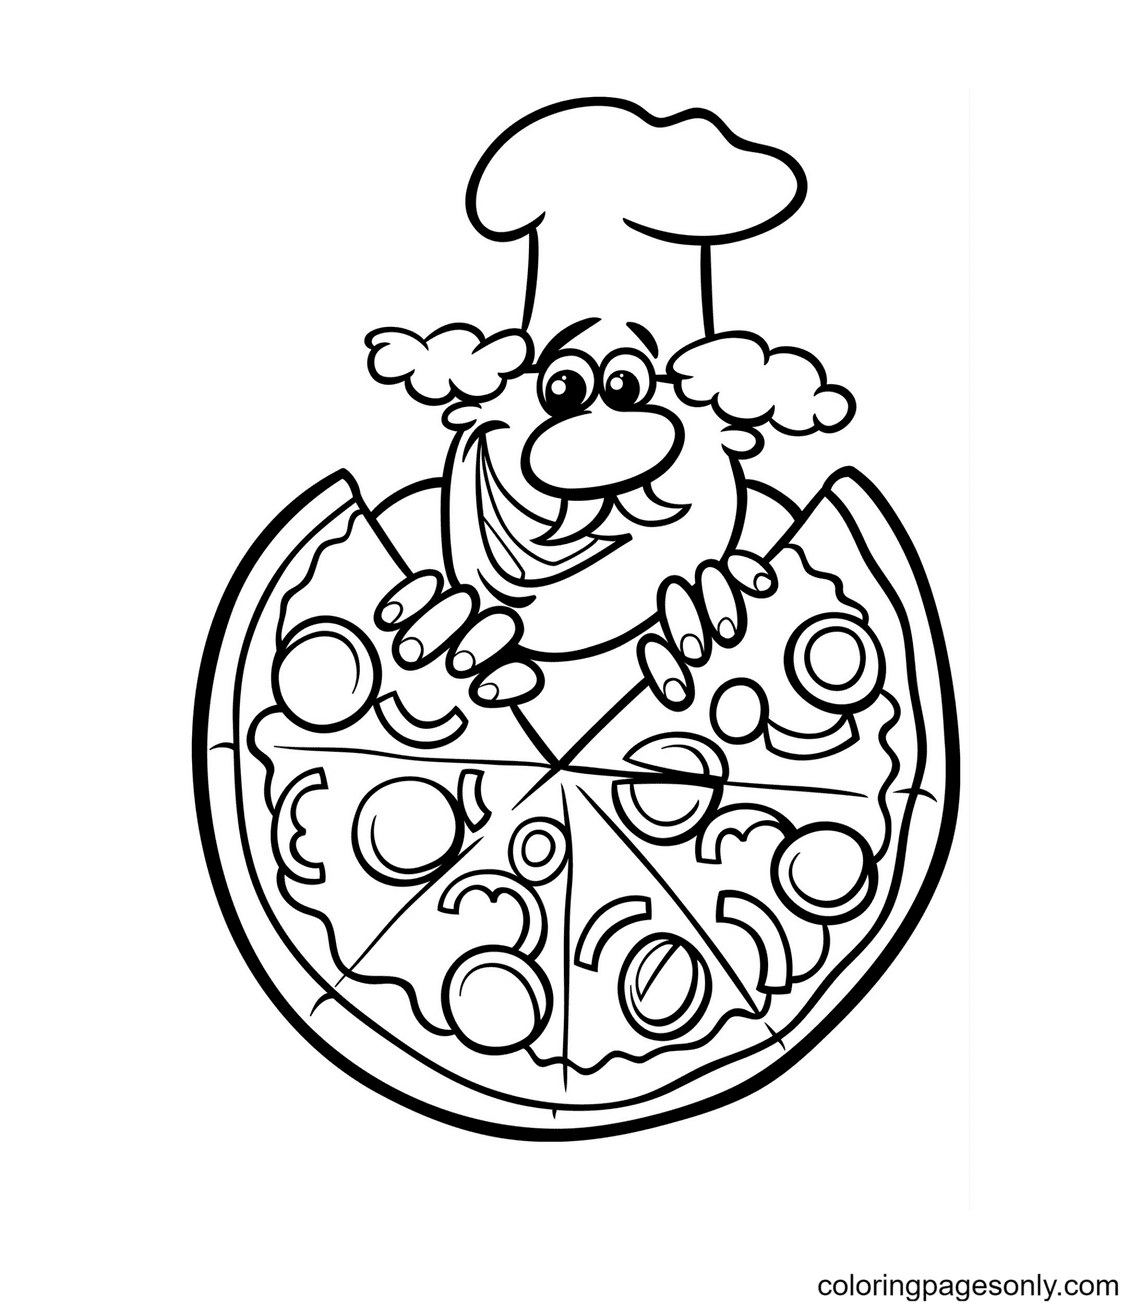 Раскраска Пицца и Шеф-повар